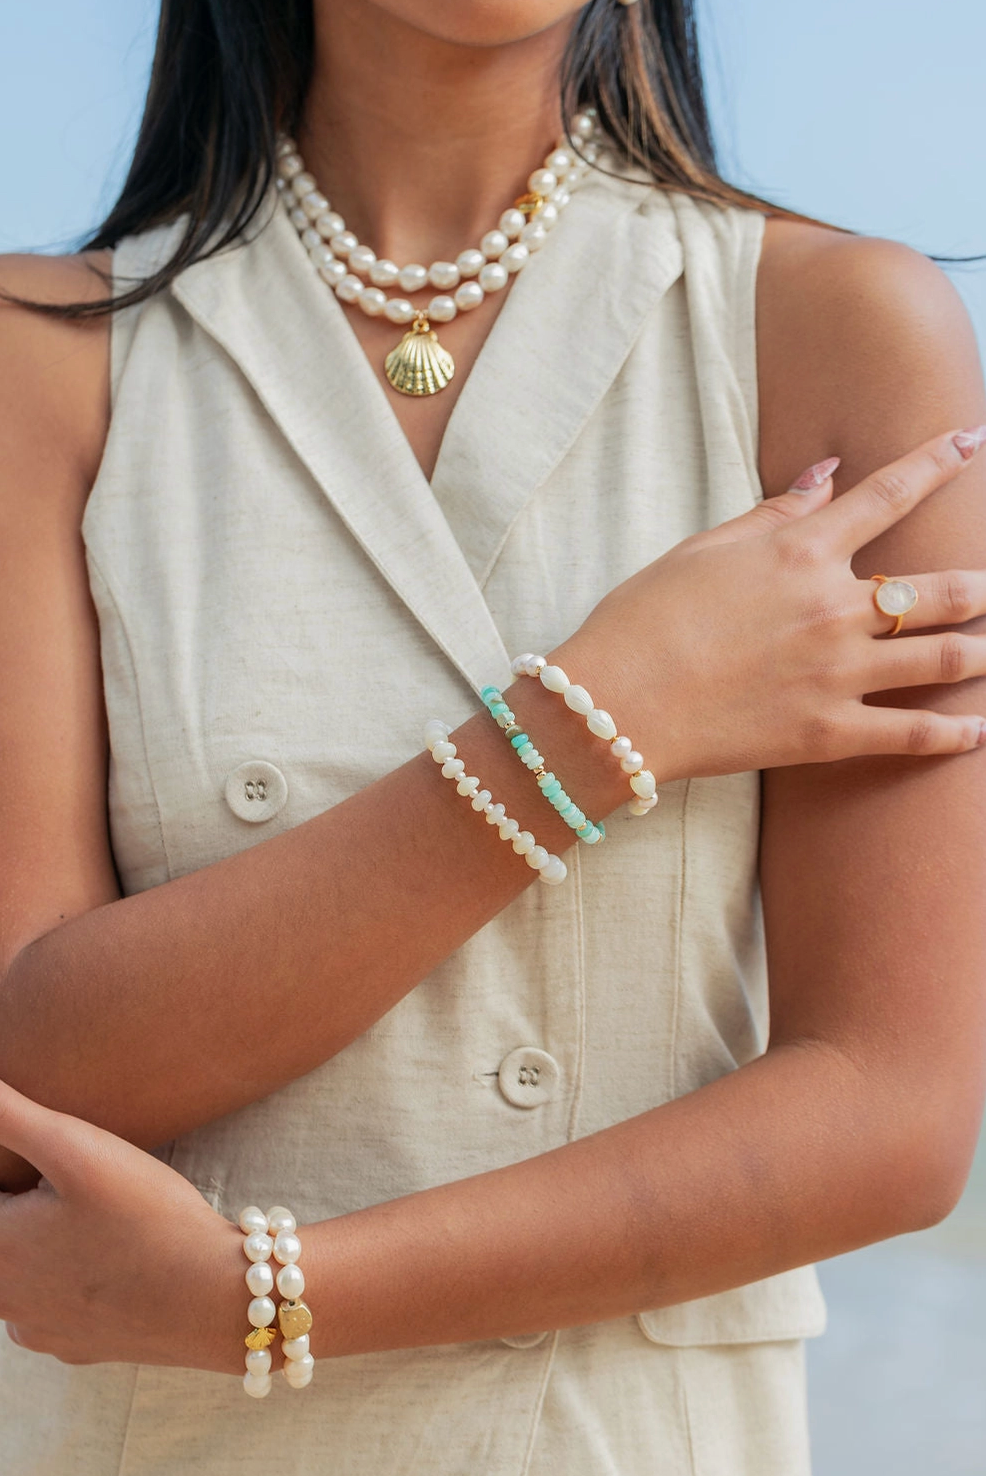 Statement White Pearl Necklace with Gold Shell Pendant - Kawai - Ke Aloha Jewelry